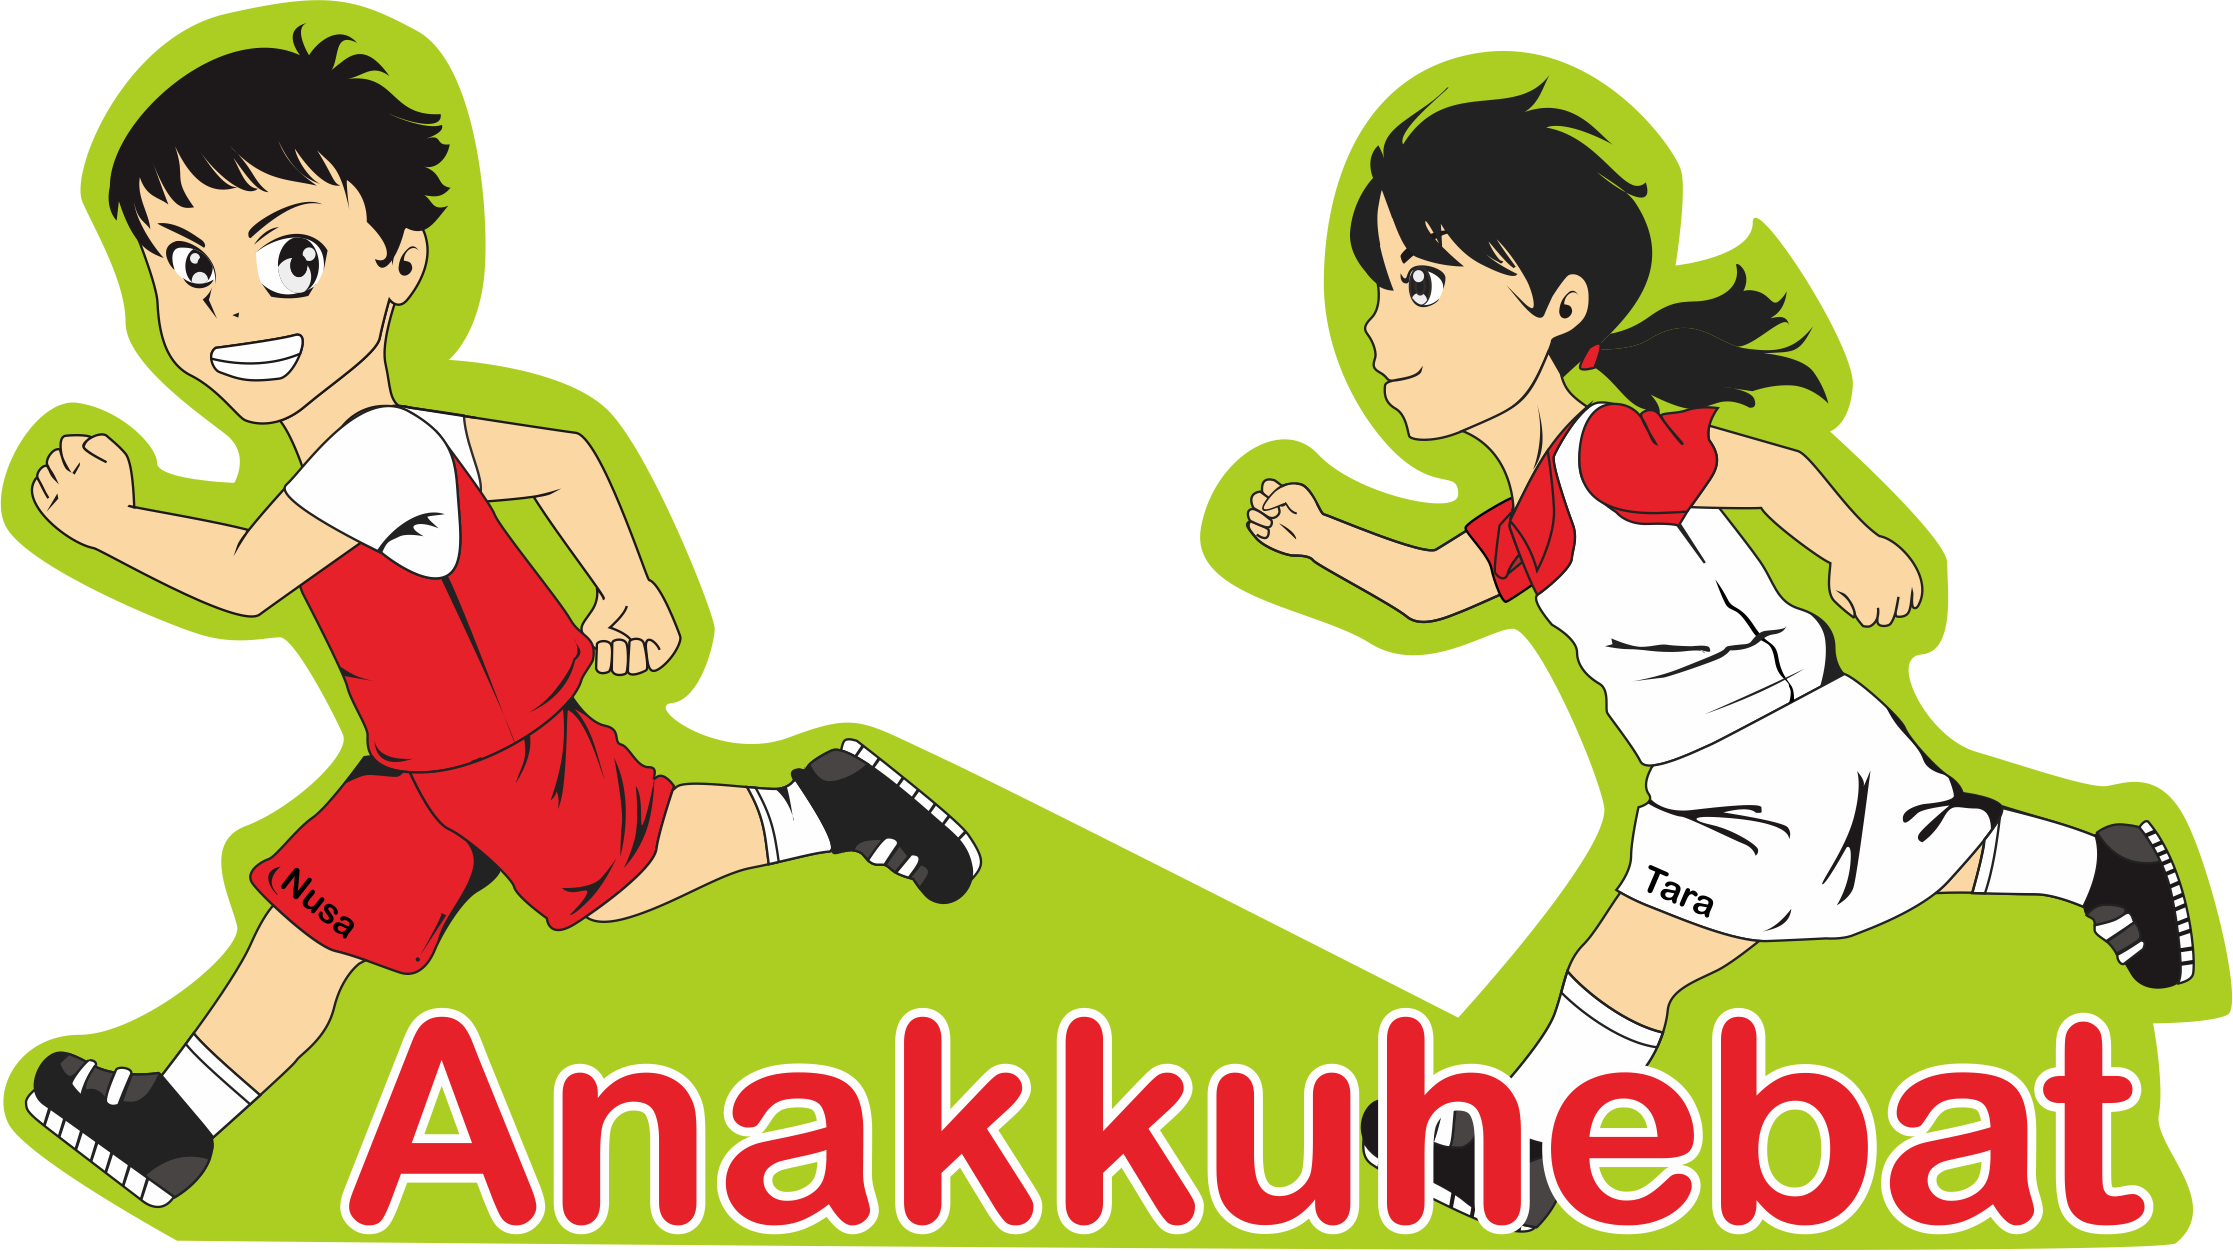 Anakkuhebat - Com - Entrepreneurship (2233x1251)